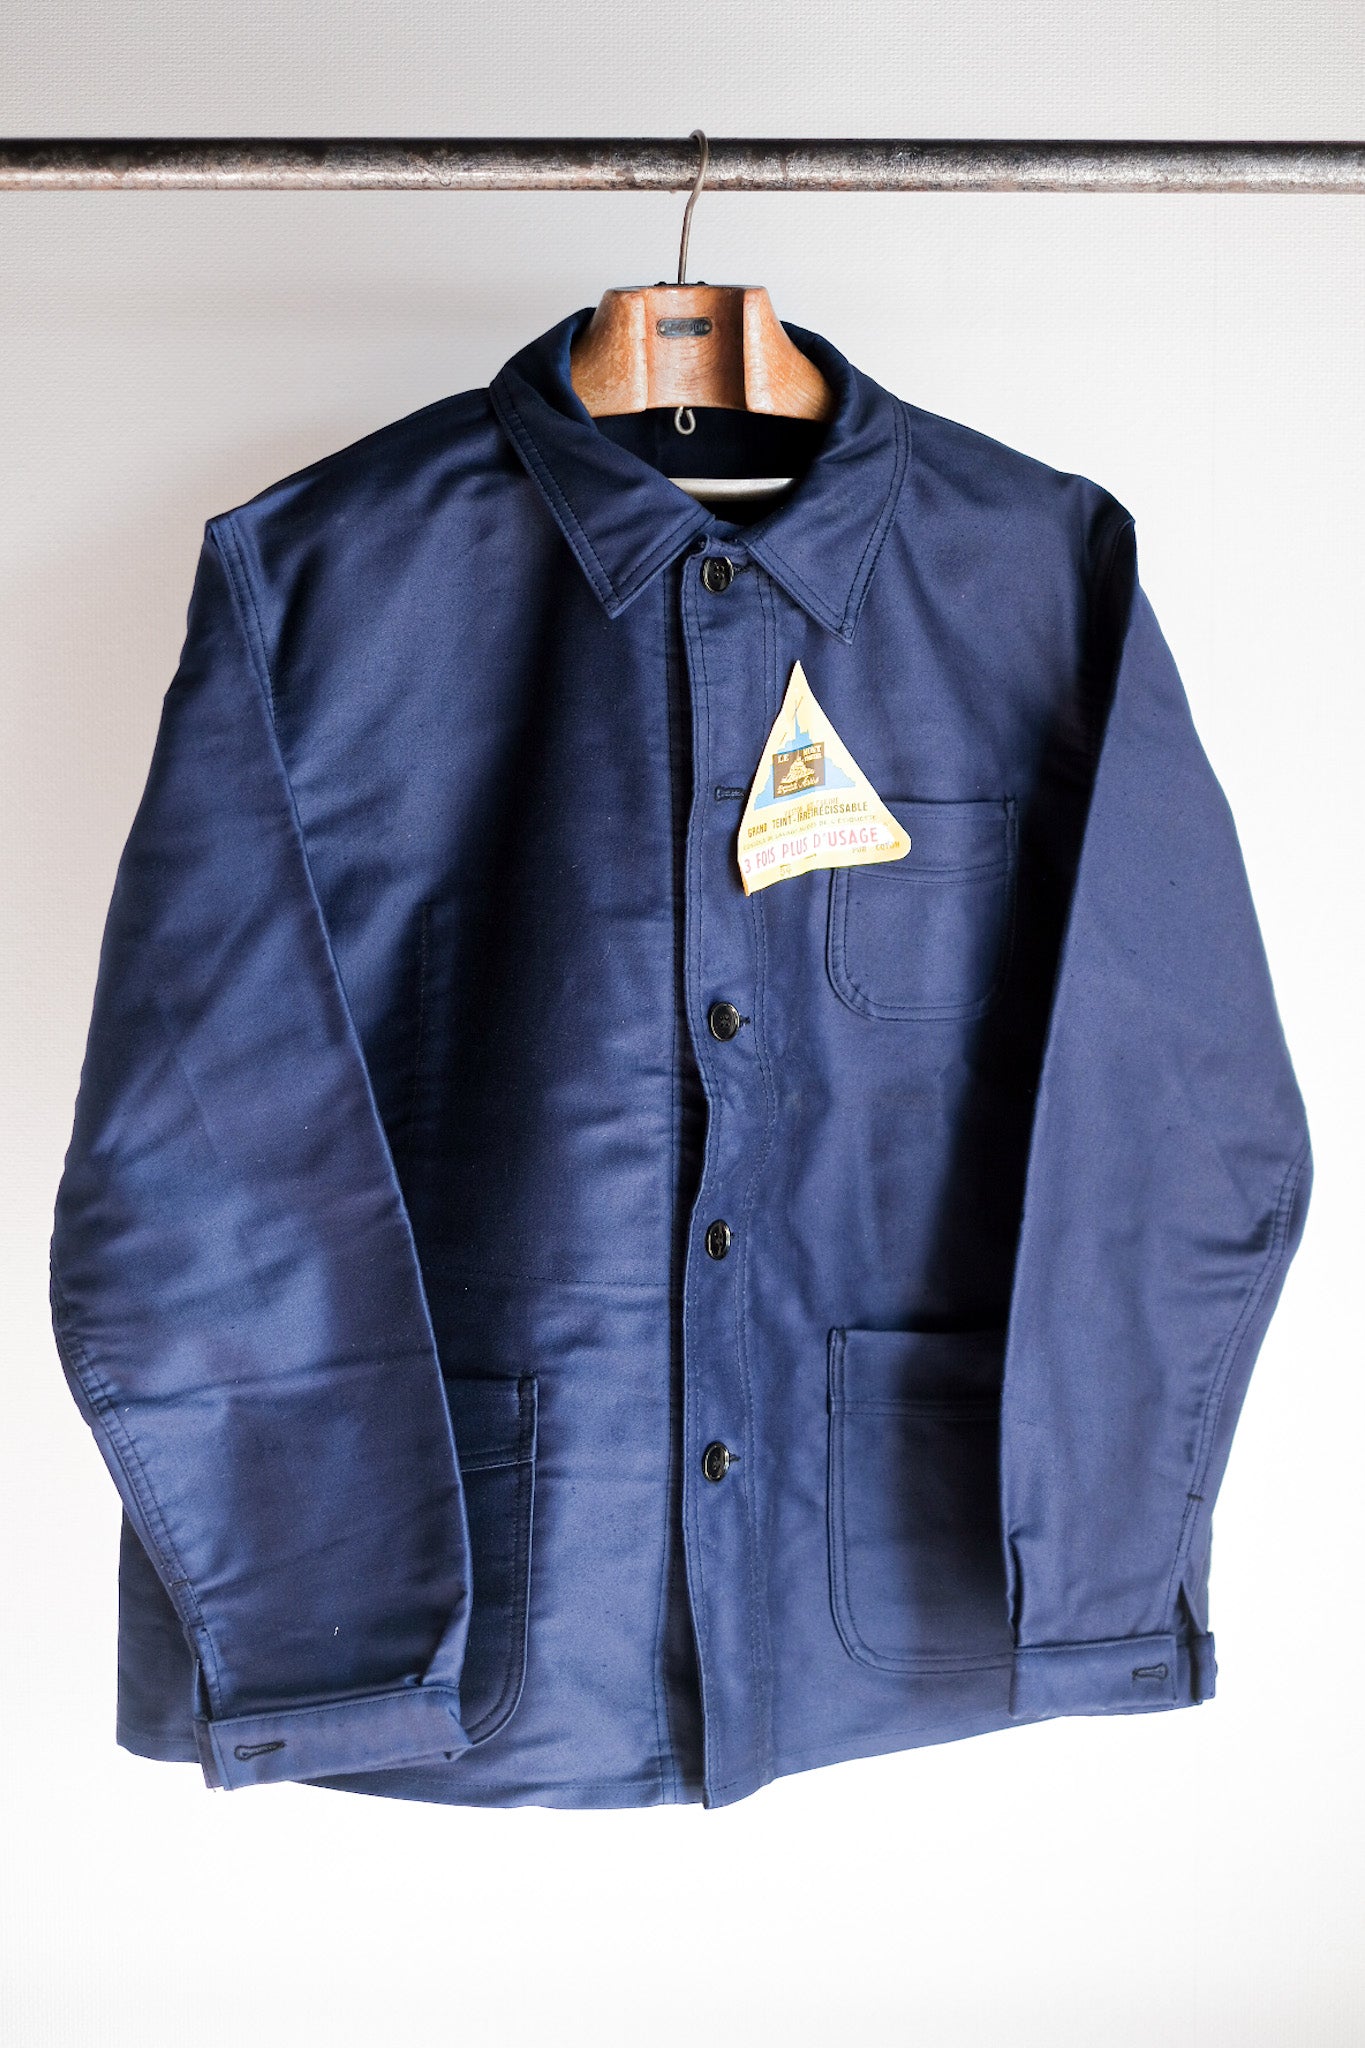 [~ 50's] French Vintage Blue Moleskin Work Jacket "Le Mont Stock" "Dead Stock"